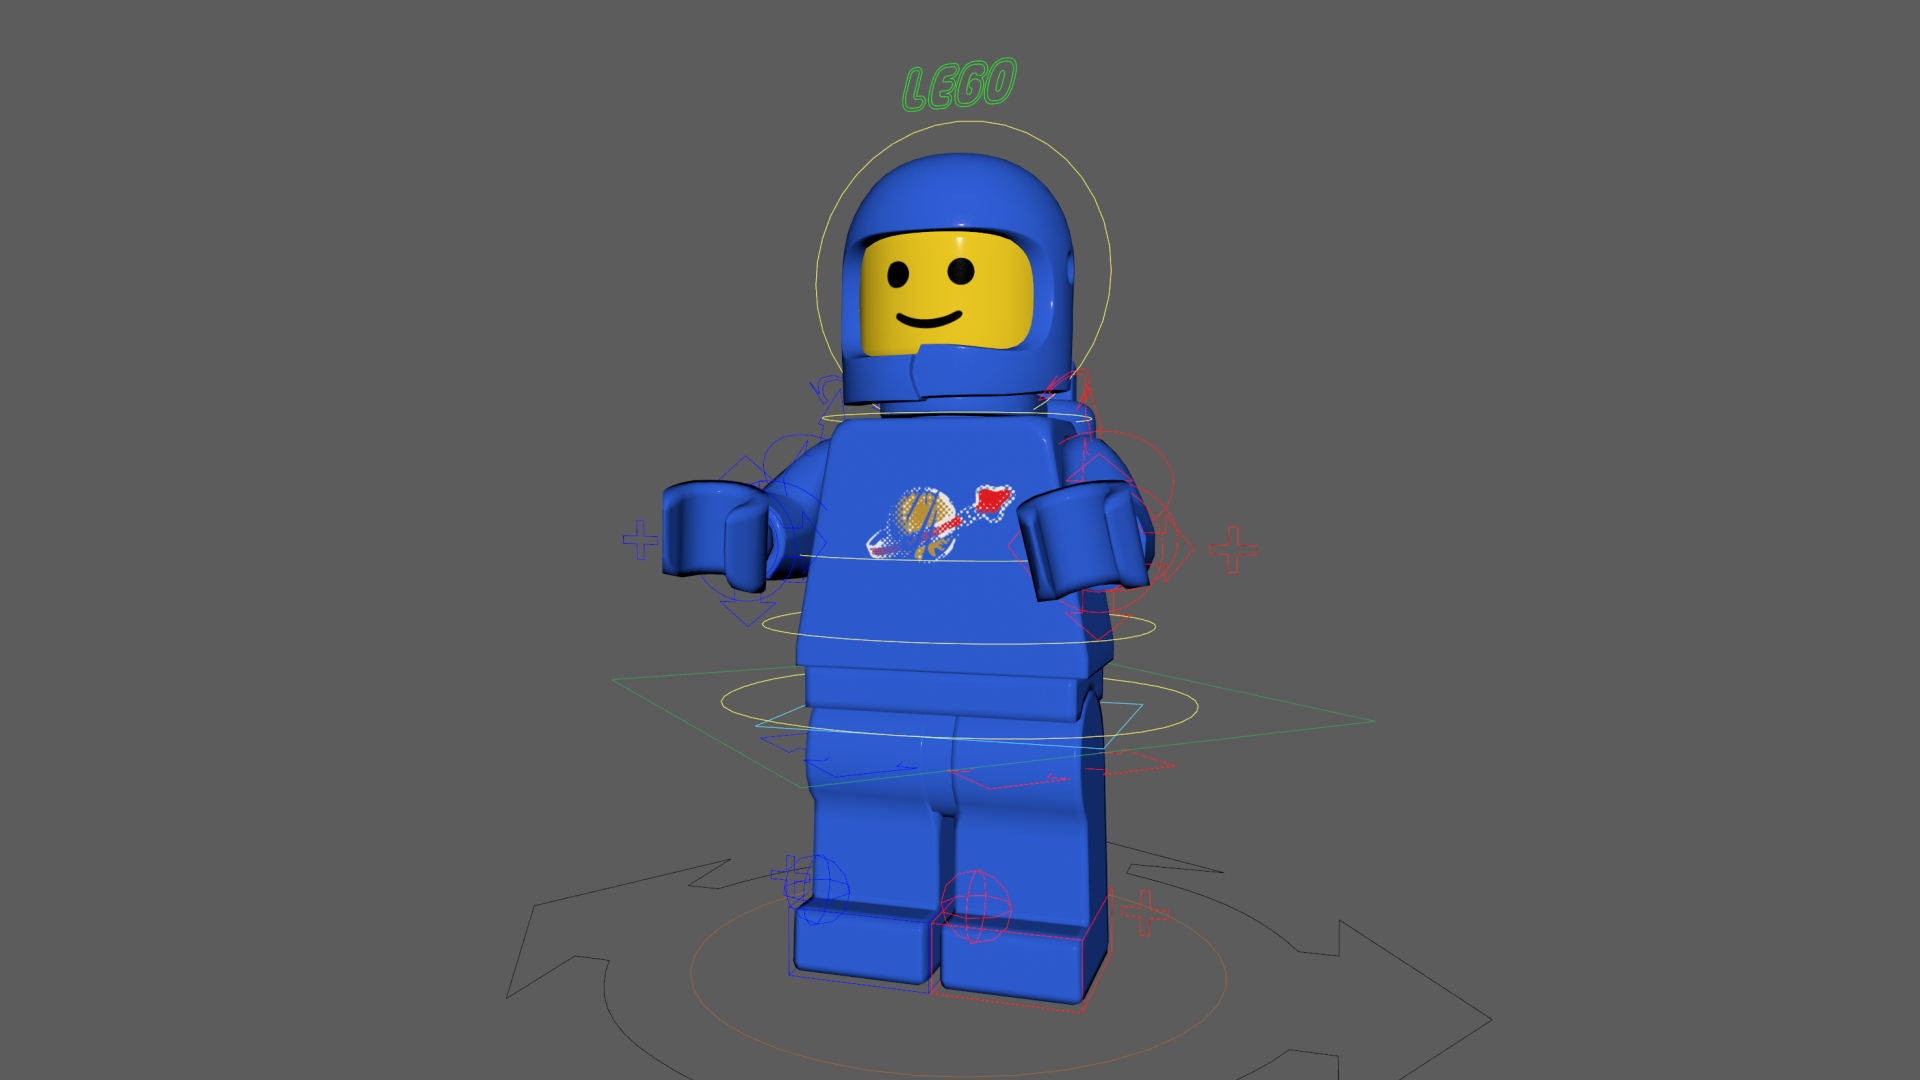 Benny The Astronaut From The Lego Movie Art Area Rug Home Decor - Mugteeco